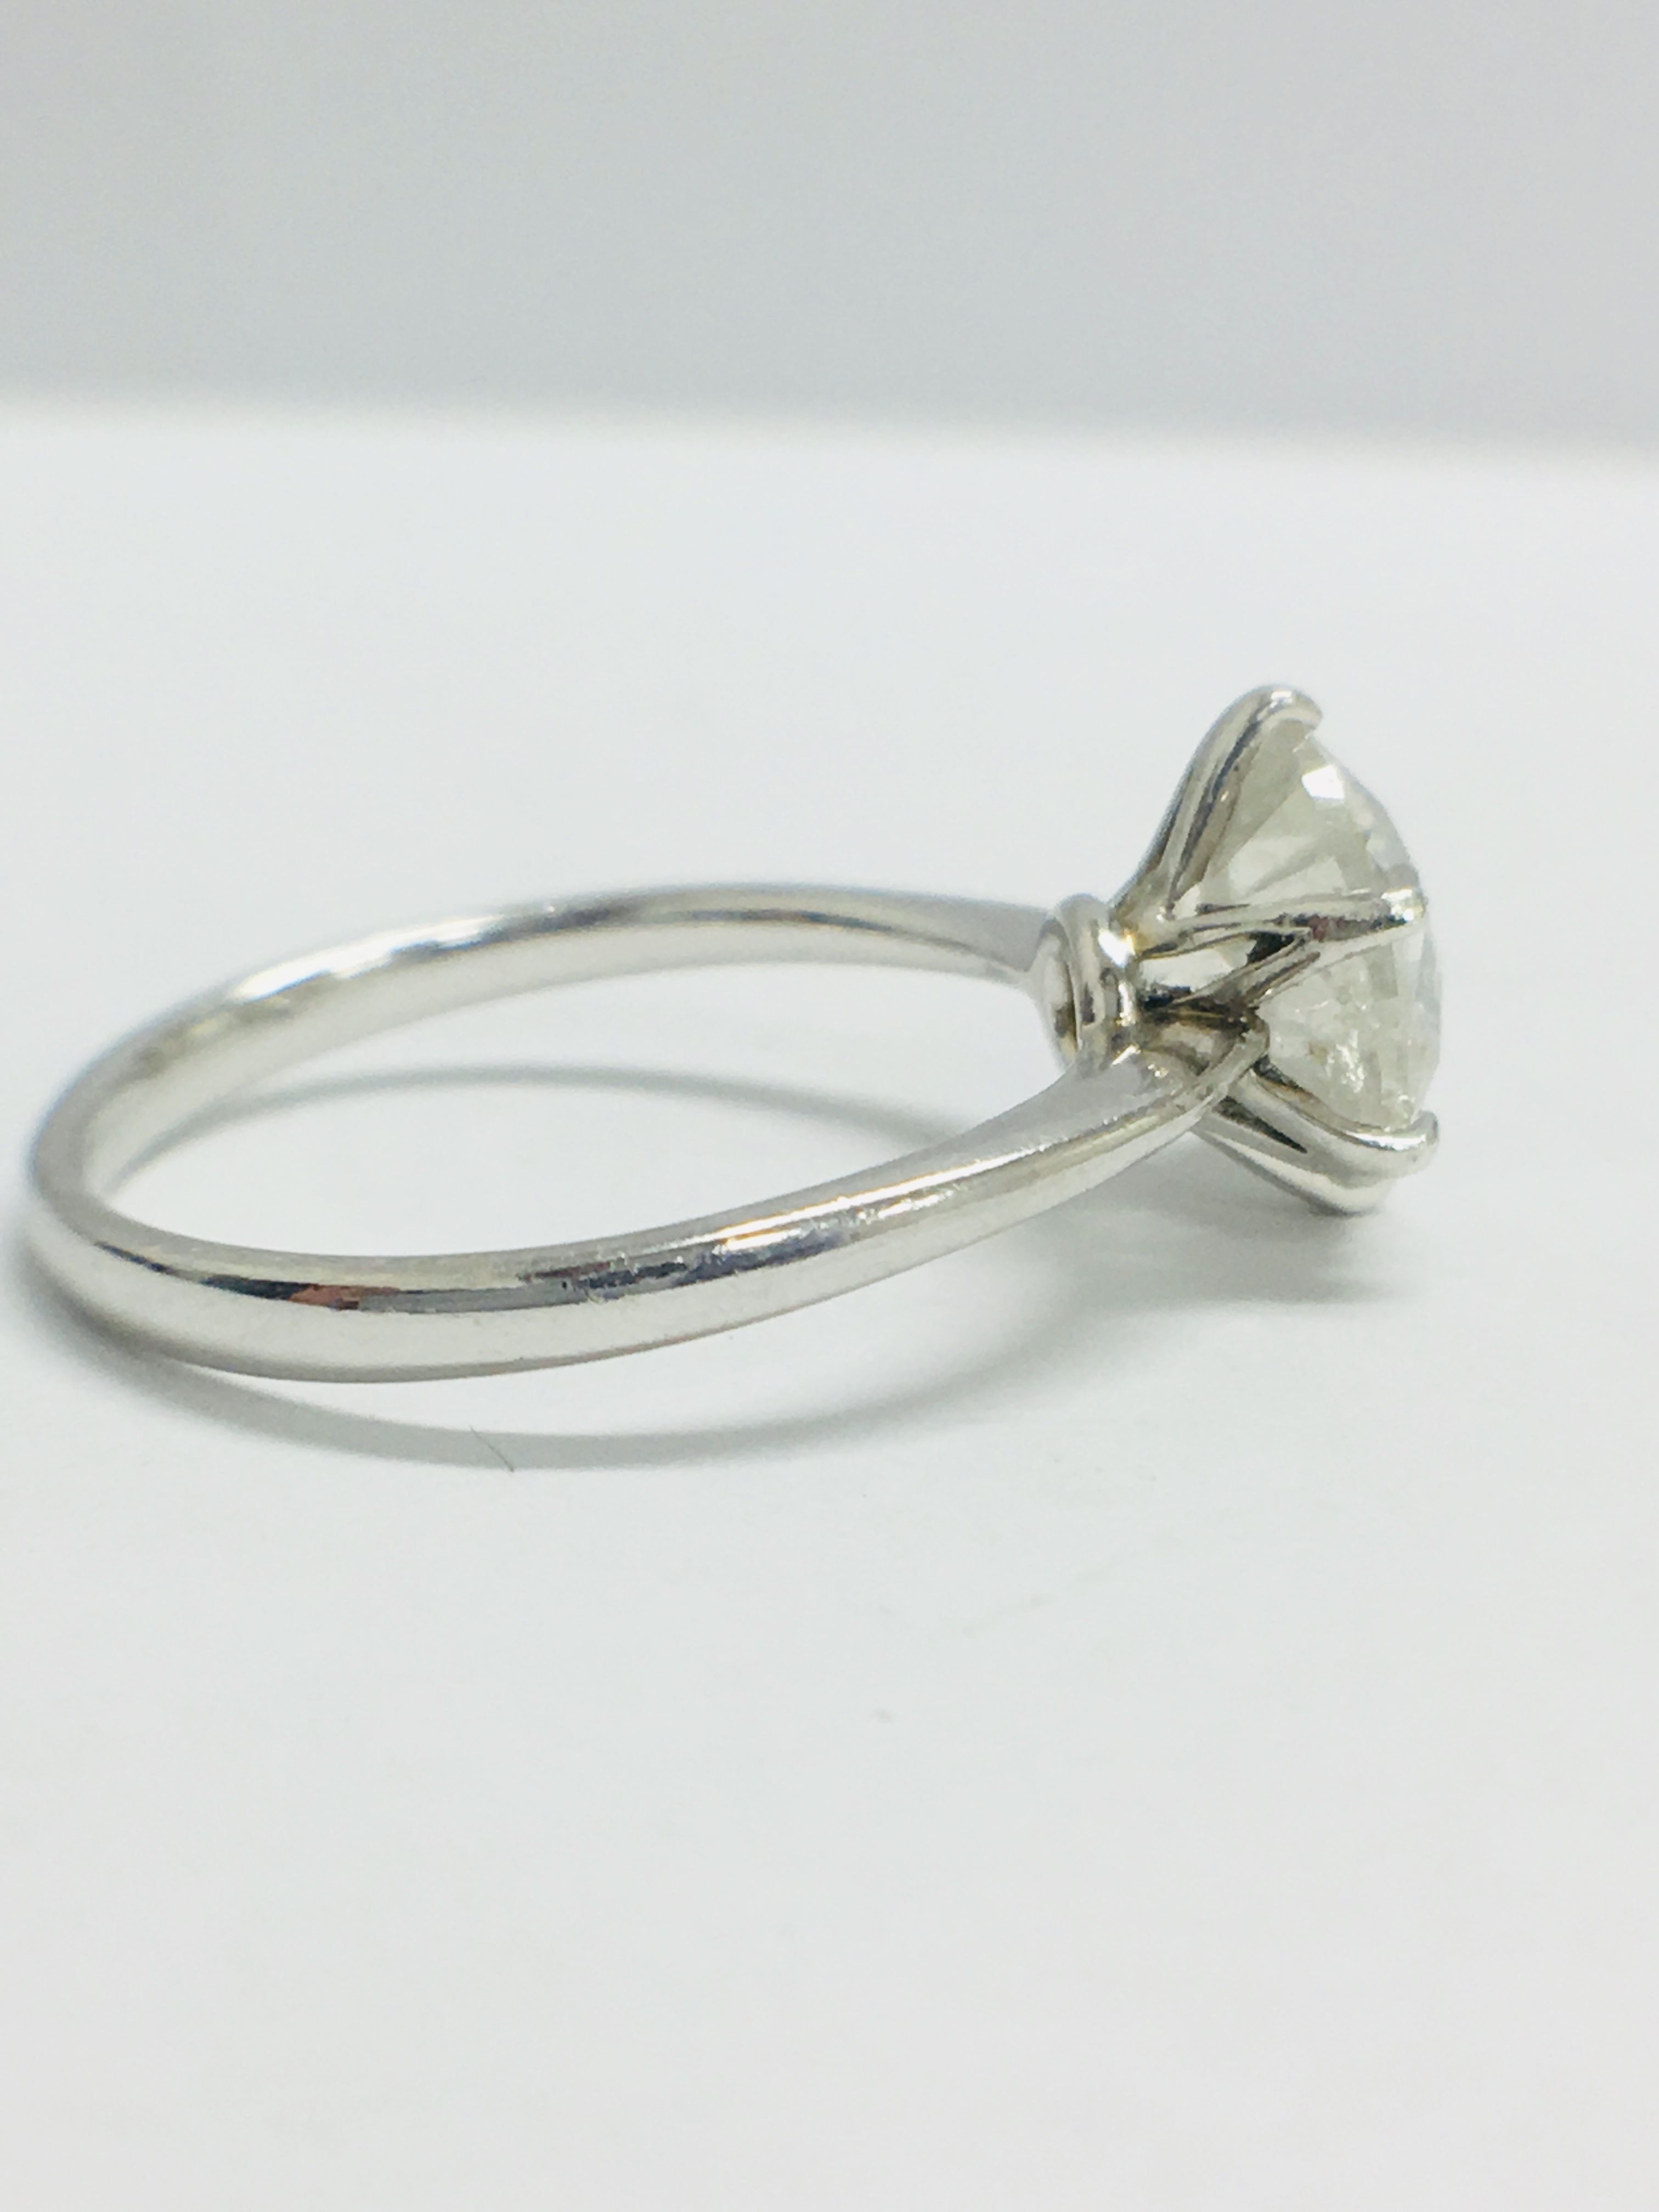 1.80ct diamond solitaire ring set in Platinum setting - Image 7 of 10